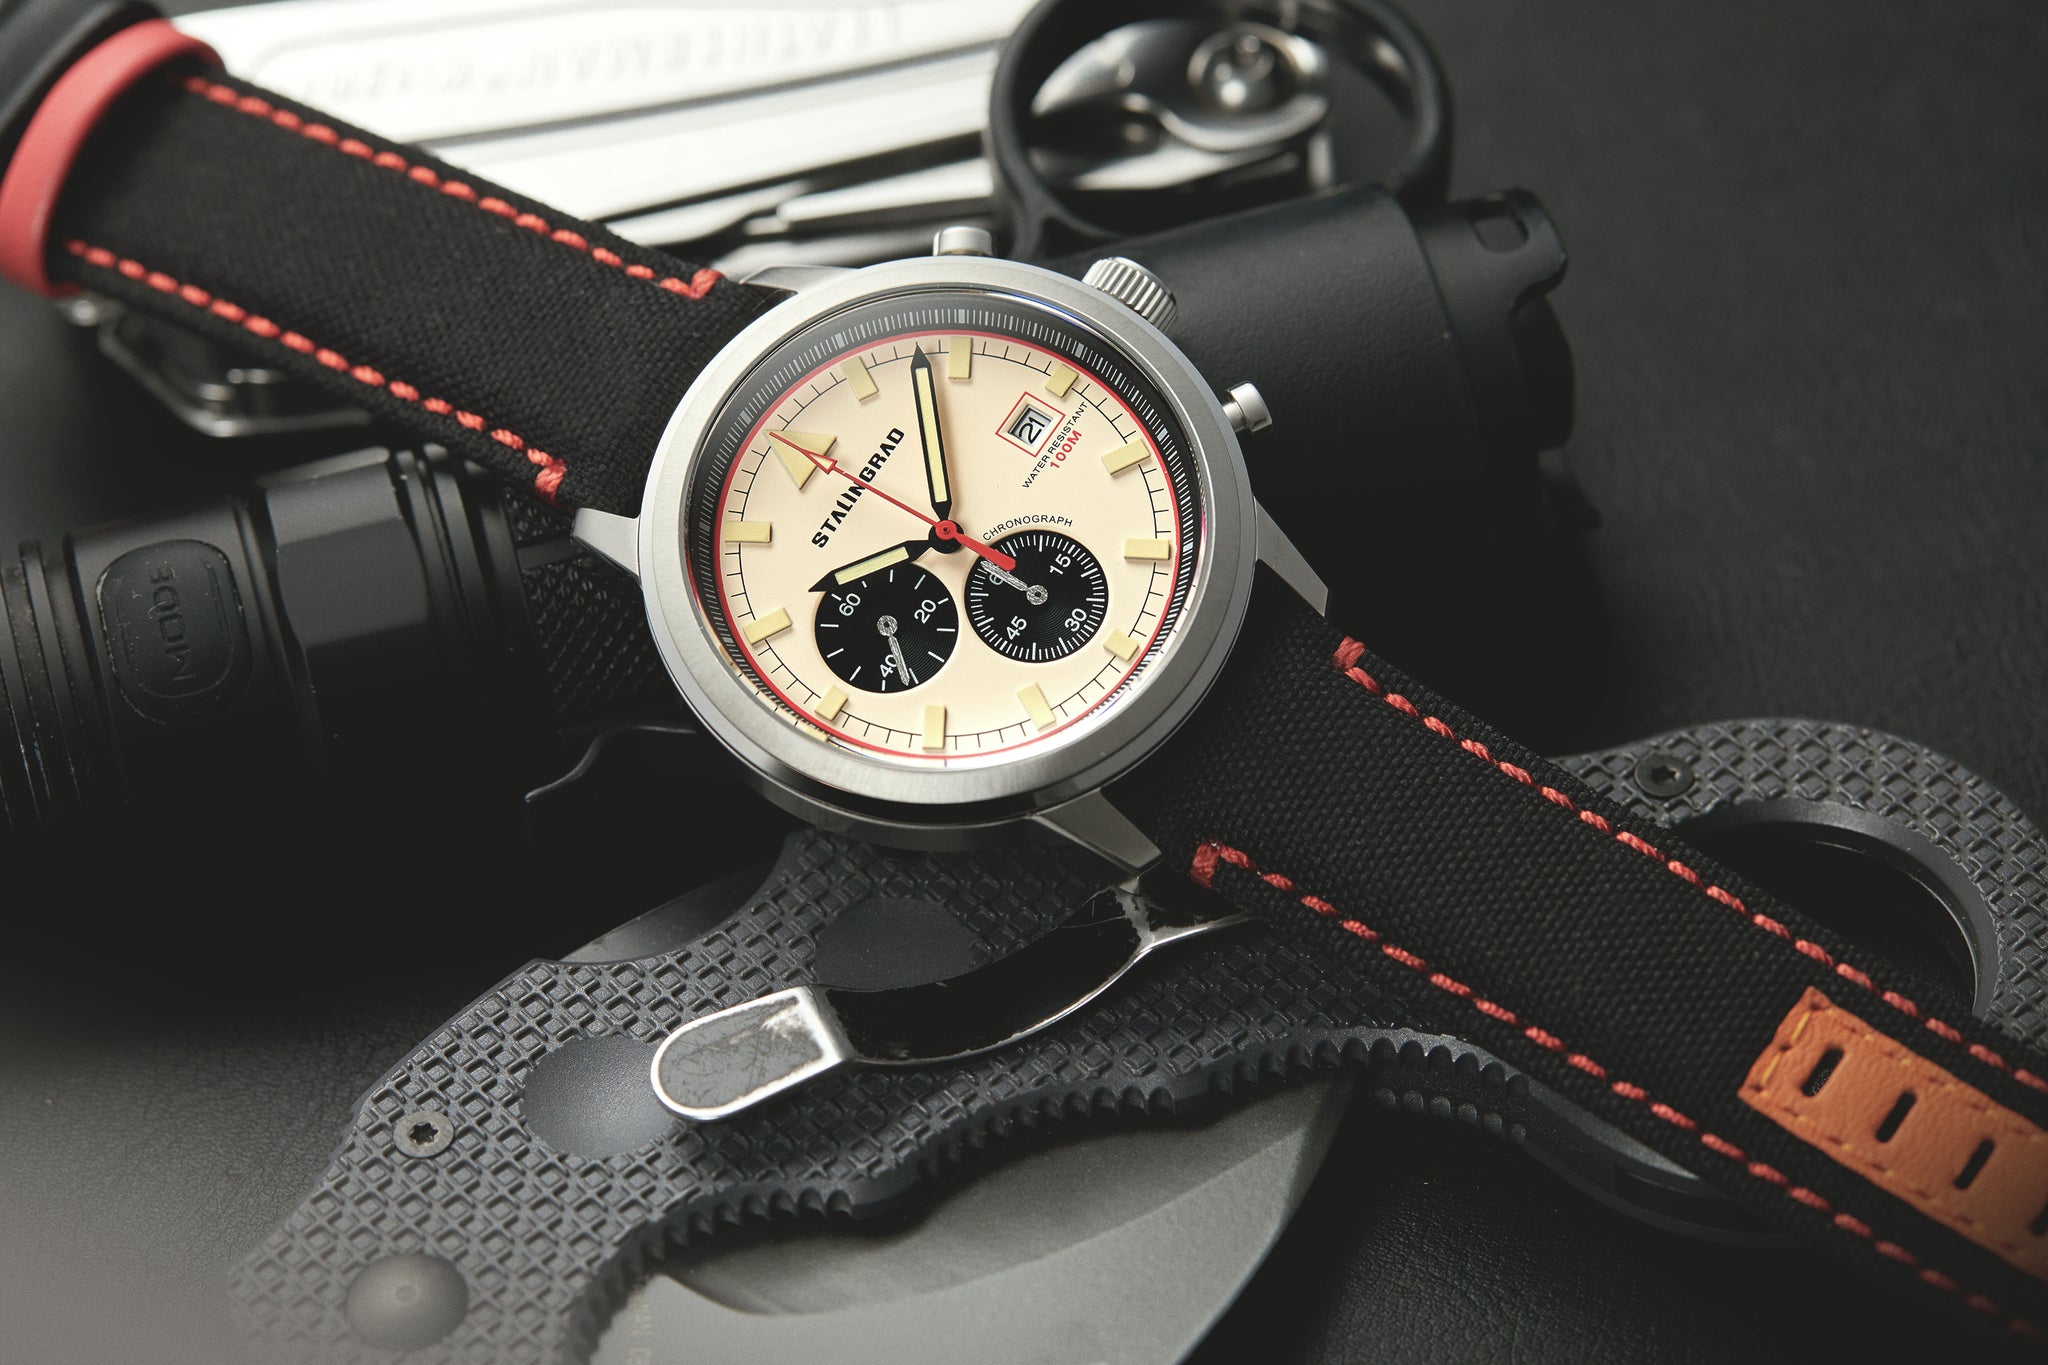 Chronograph watch with black cordura strap